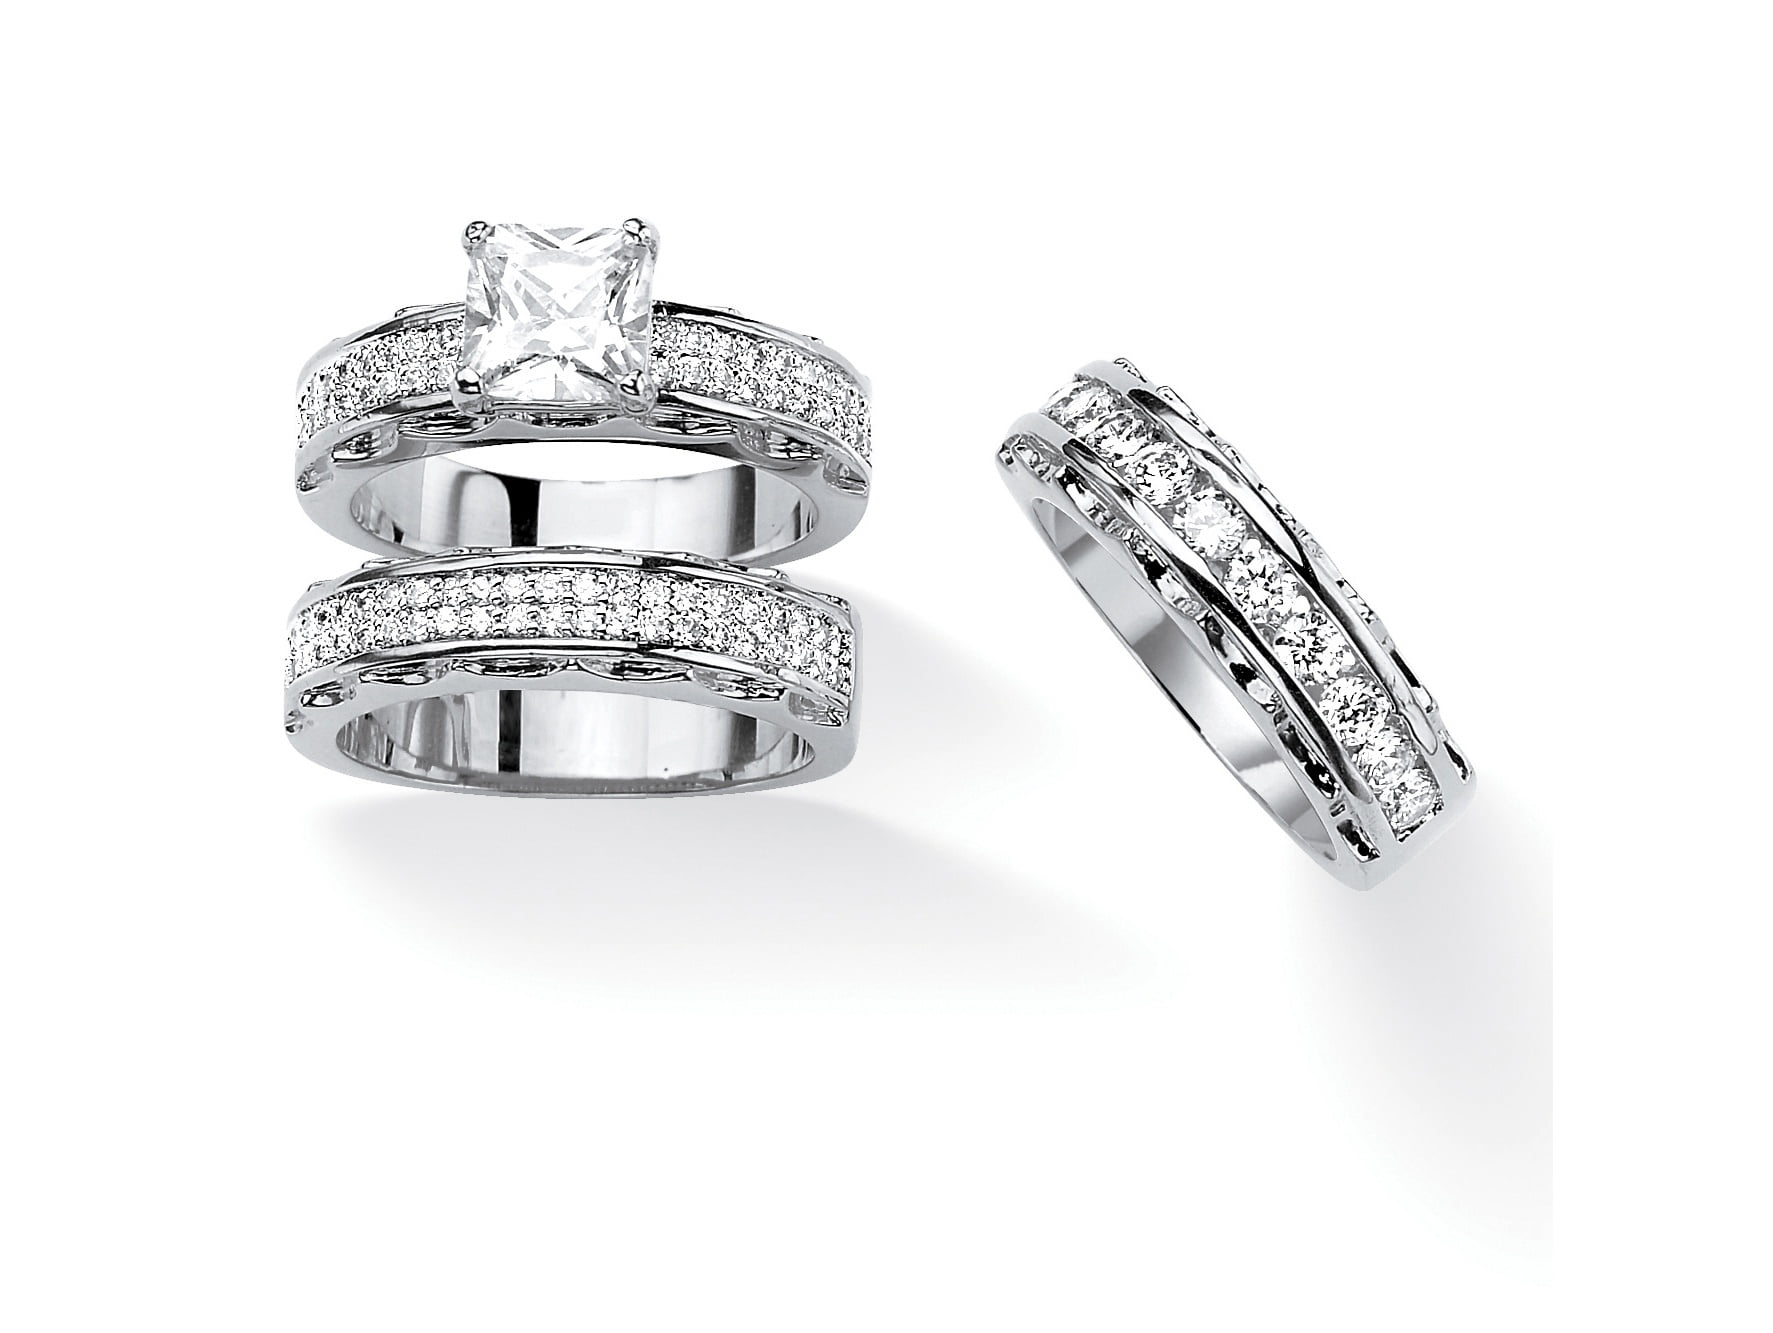 GuqiGuli 925 Solid Sterling Silver Bridal Wedding Band Engagement Ring Sets with Cushion and Princess Cut Cubic Zirconia